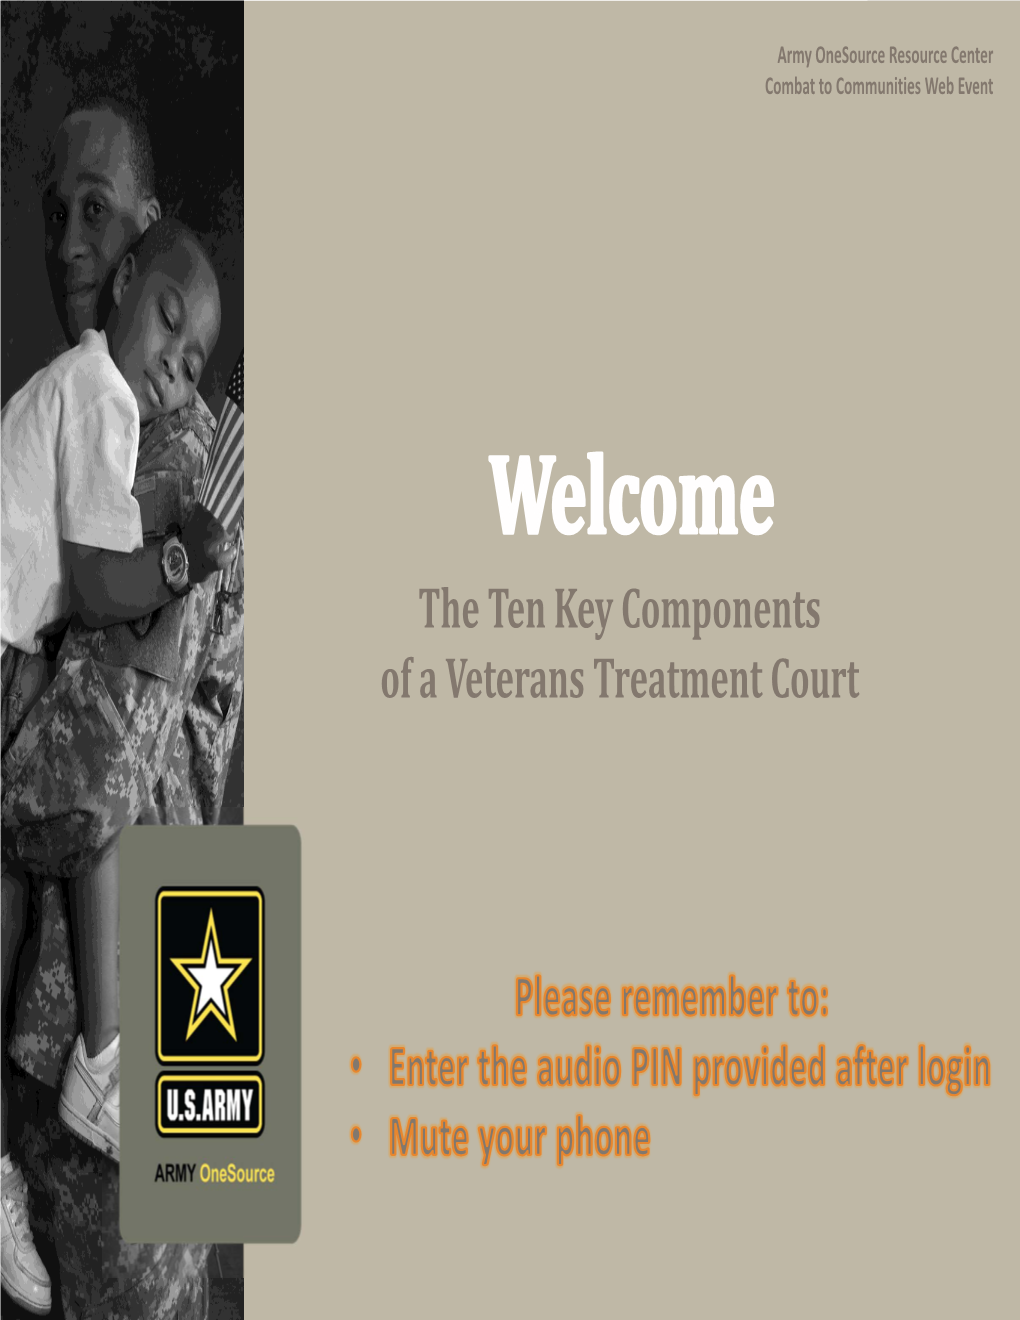 The Ten Key Components of a Veterans Treatment Court